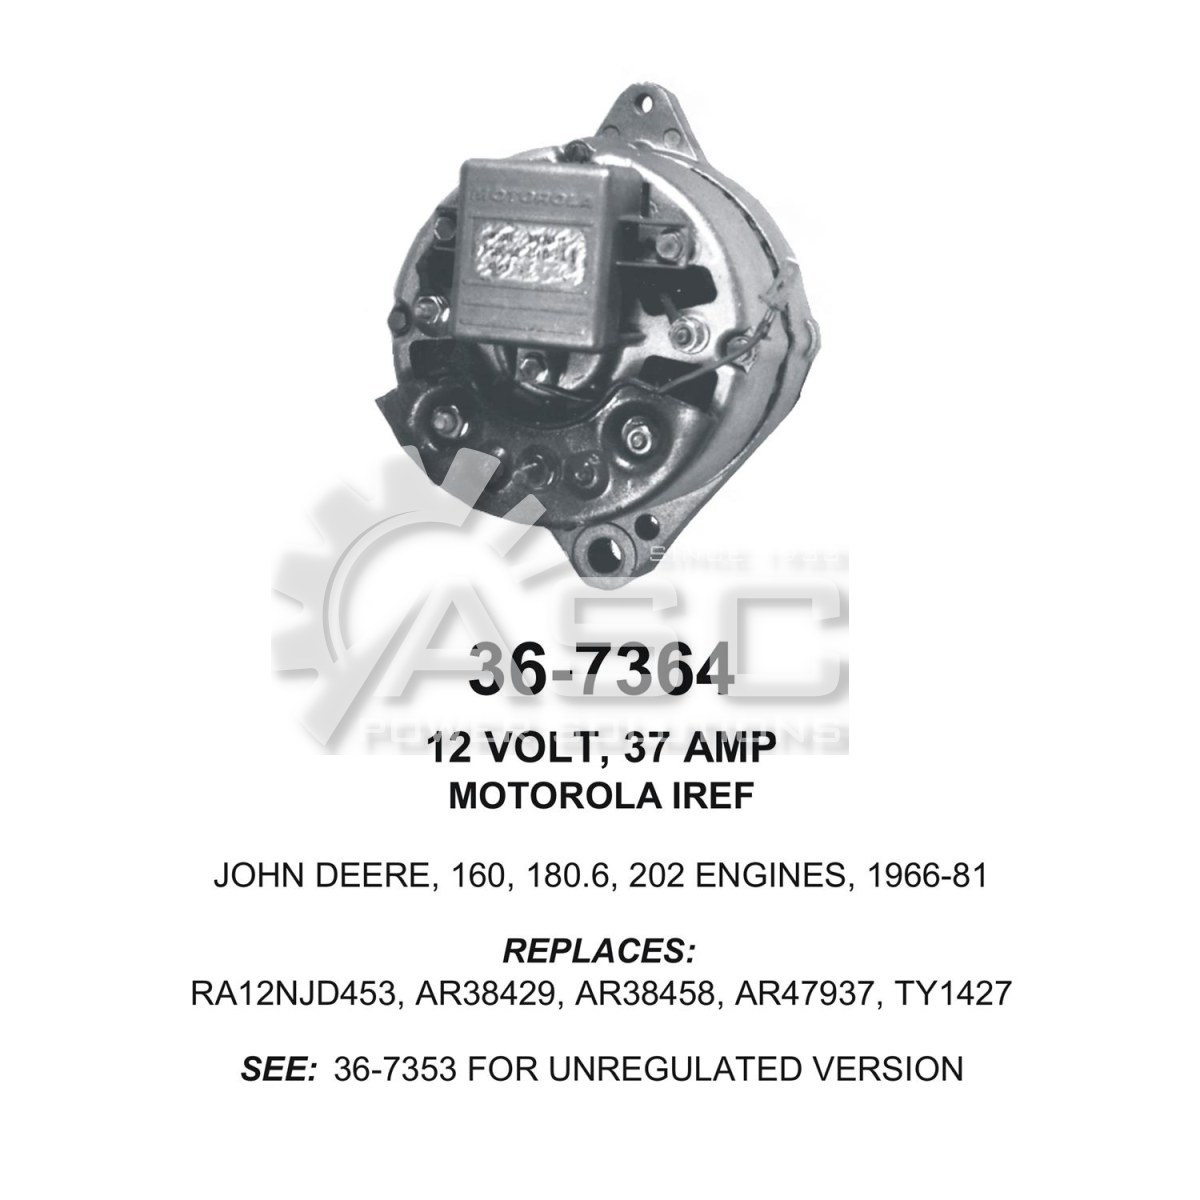 A161077_ASC, Alternator, 12V, 37 Amp, IR, EF, Motorola, Reman